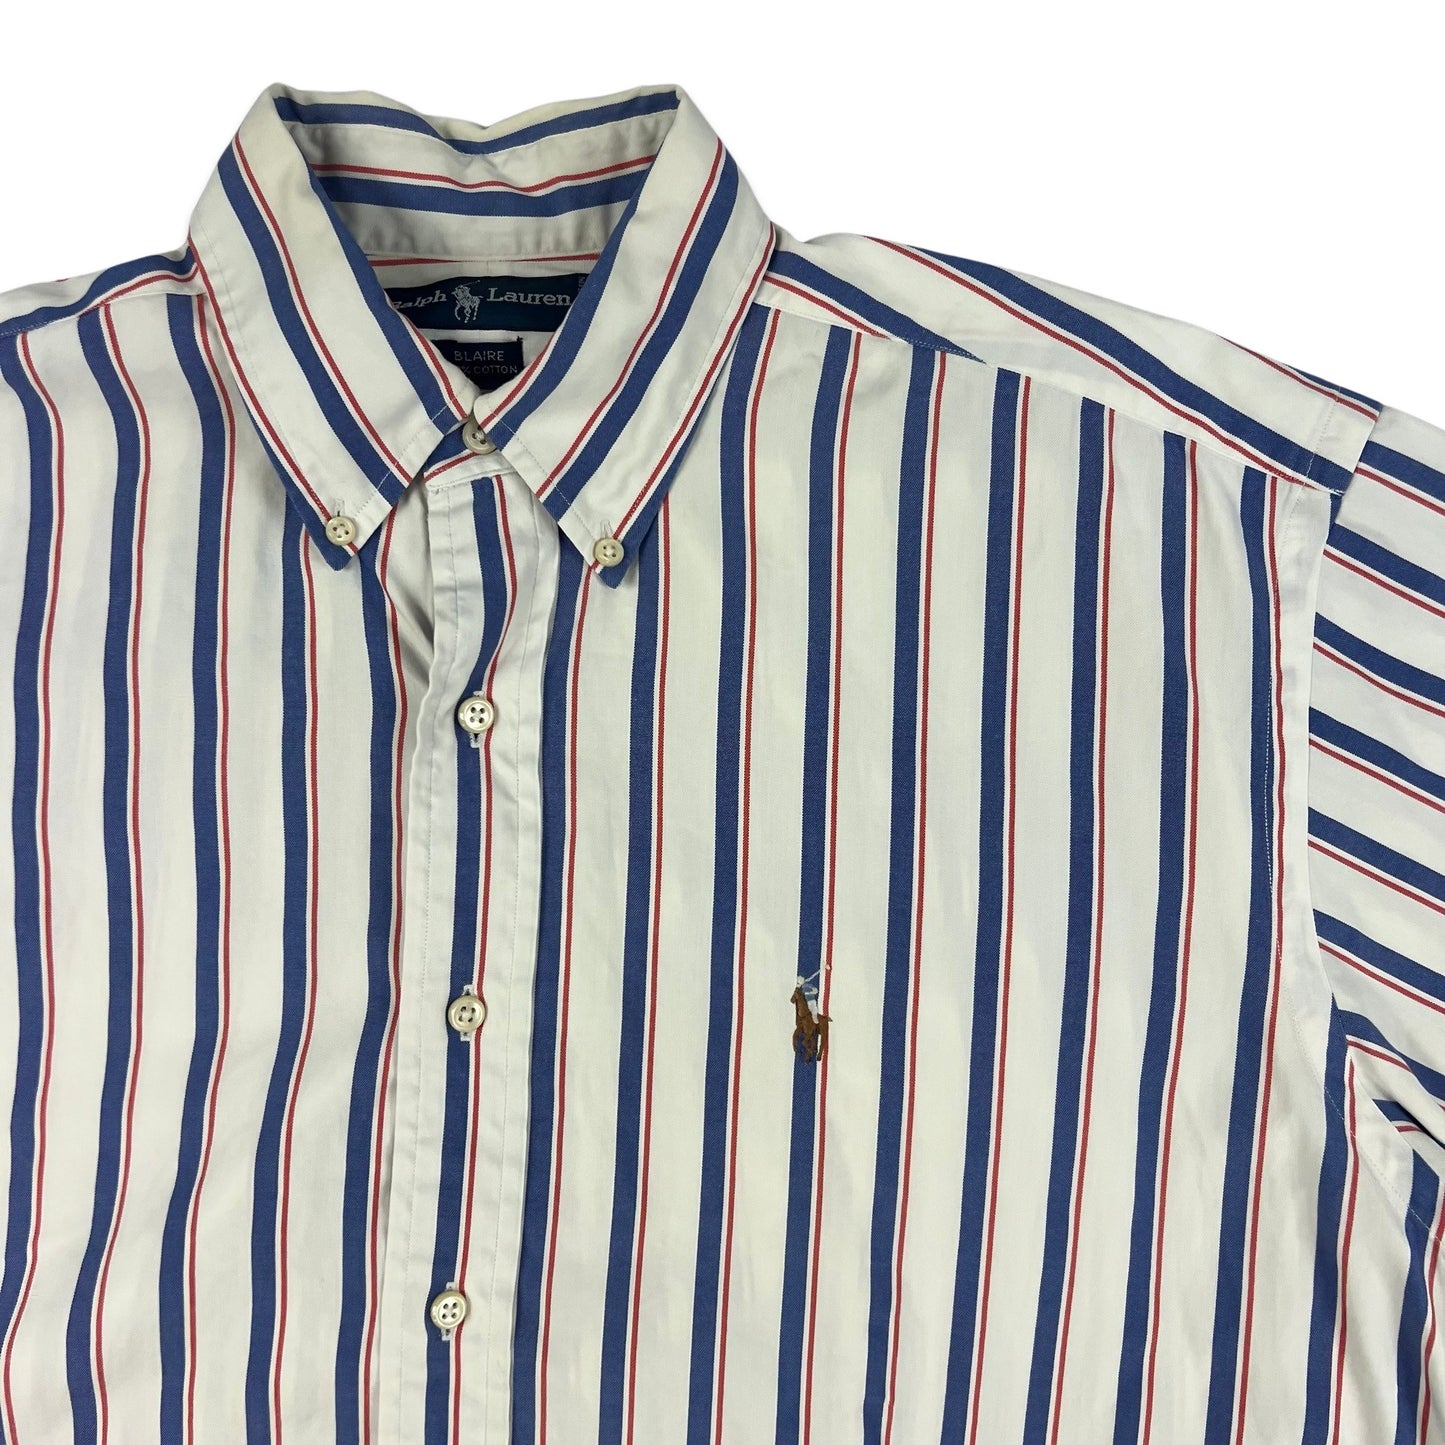 00s Vintage Ralph Lauren Stripe Shirt White Blue Red M L XL